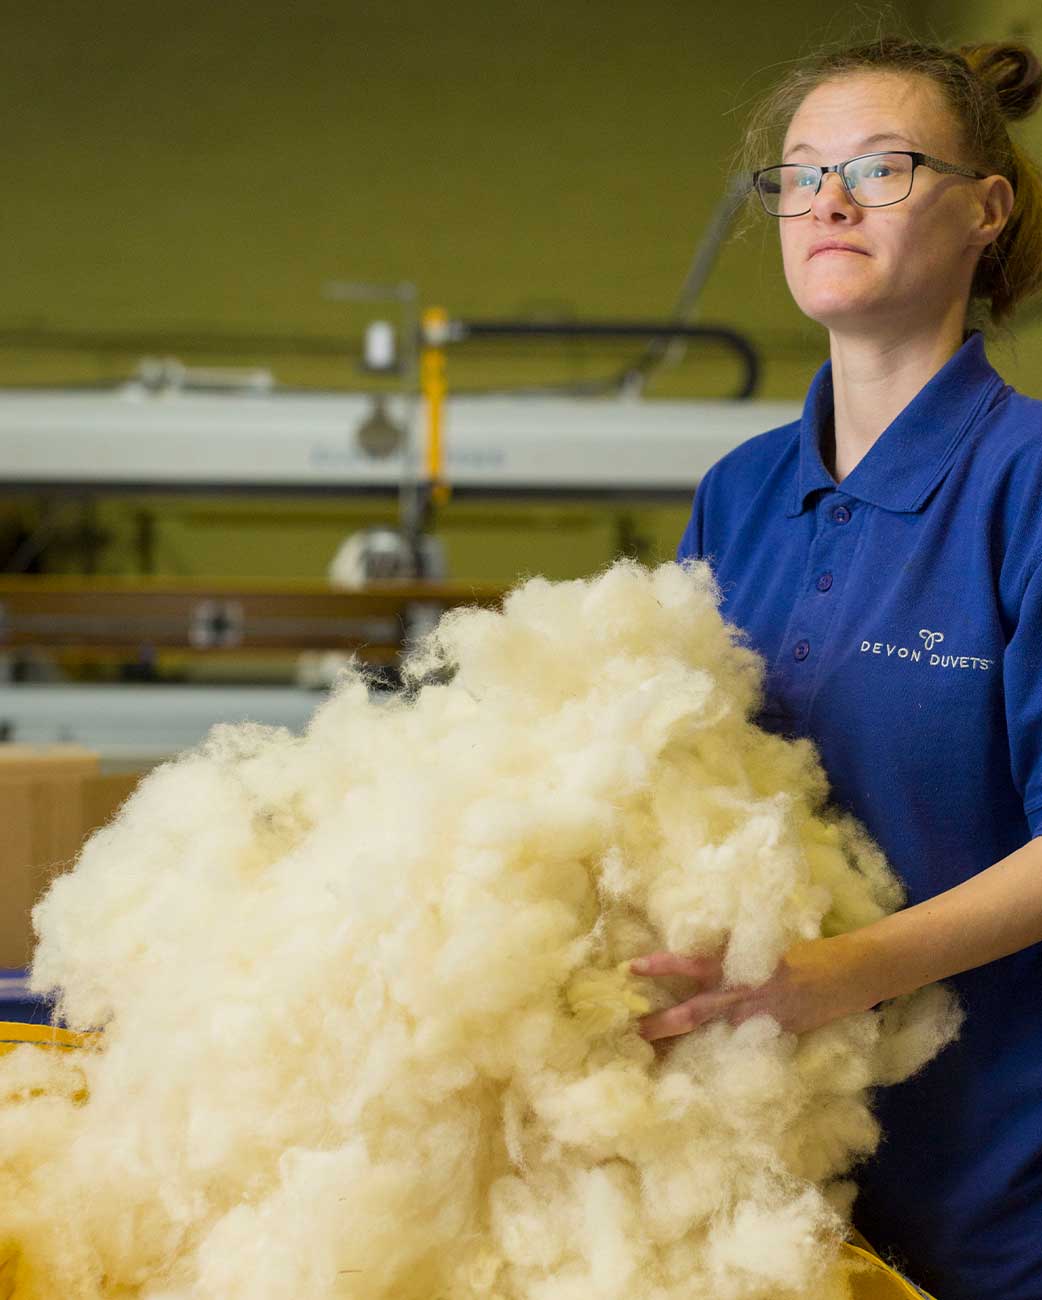 Devon Duvets worker inspecting premium British wool for sustainable bedding products.